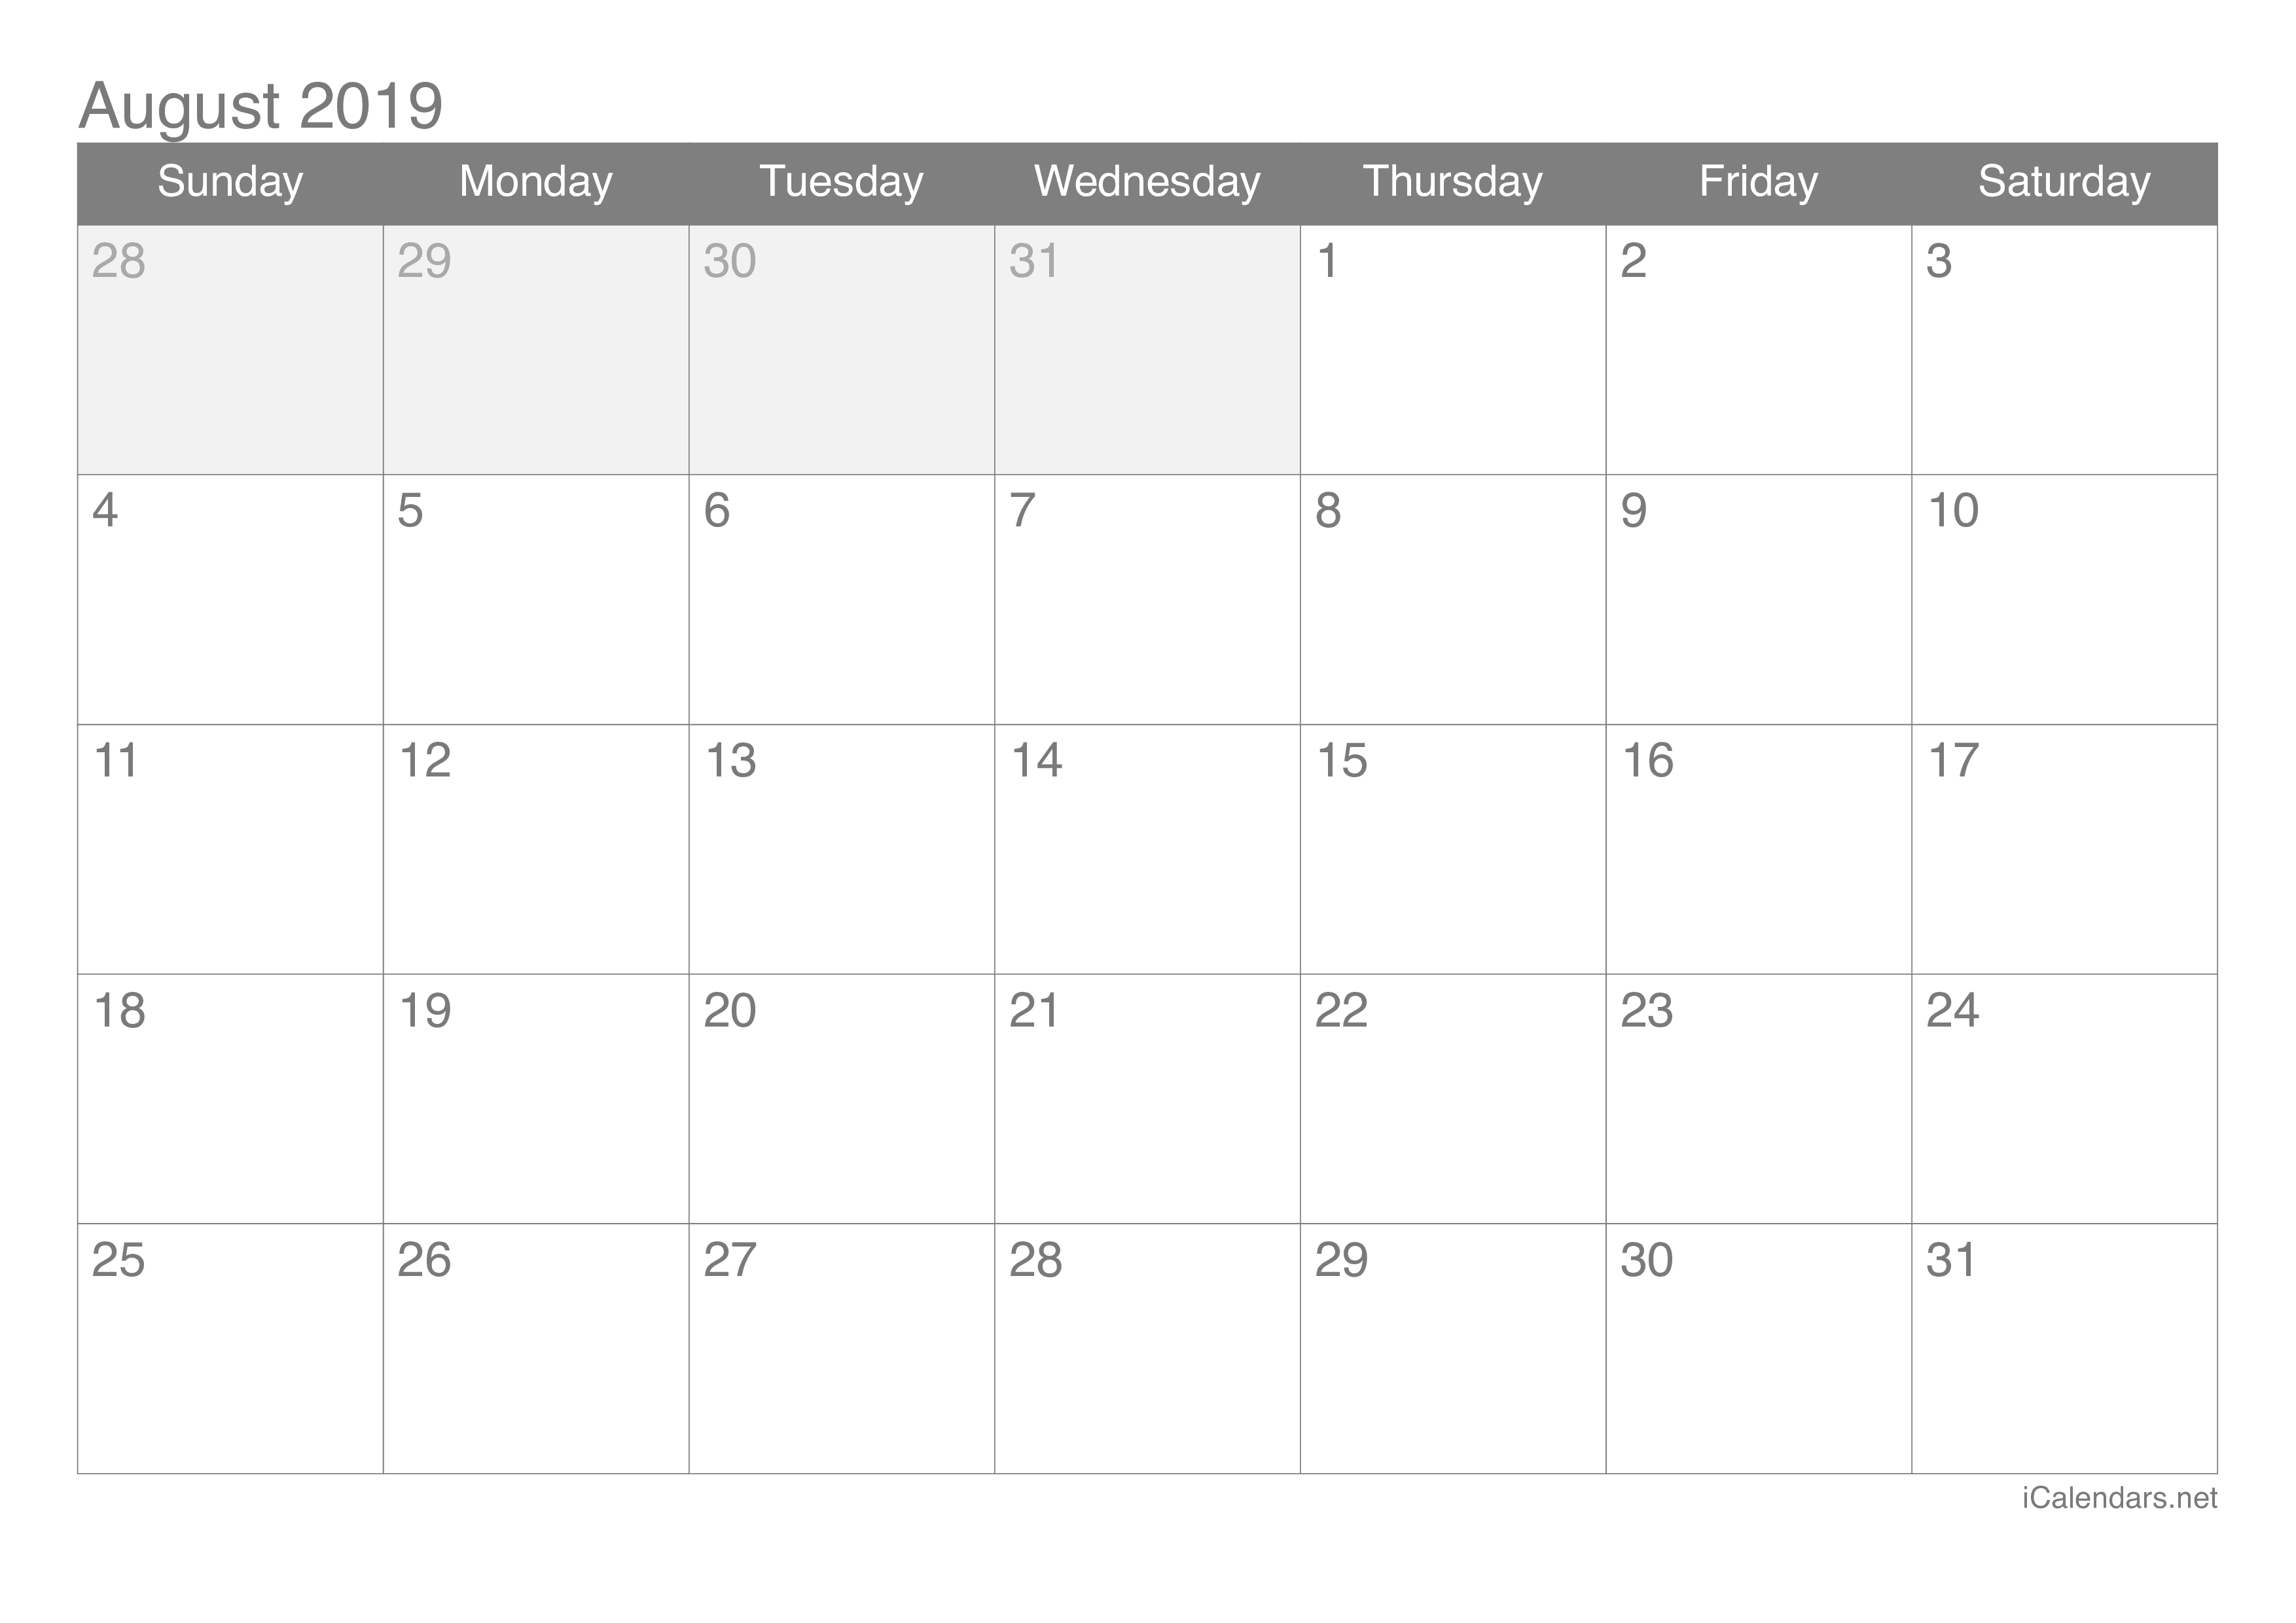 August 2019 Printable Calendar icalendars net